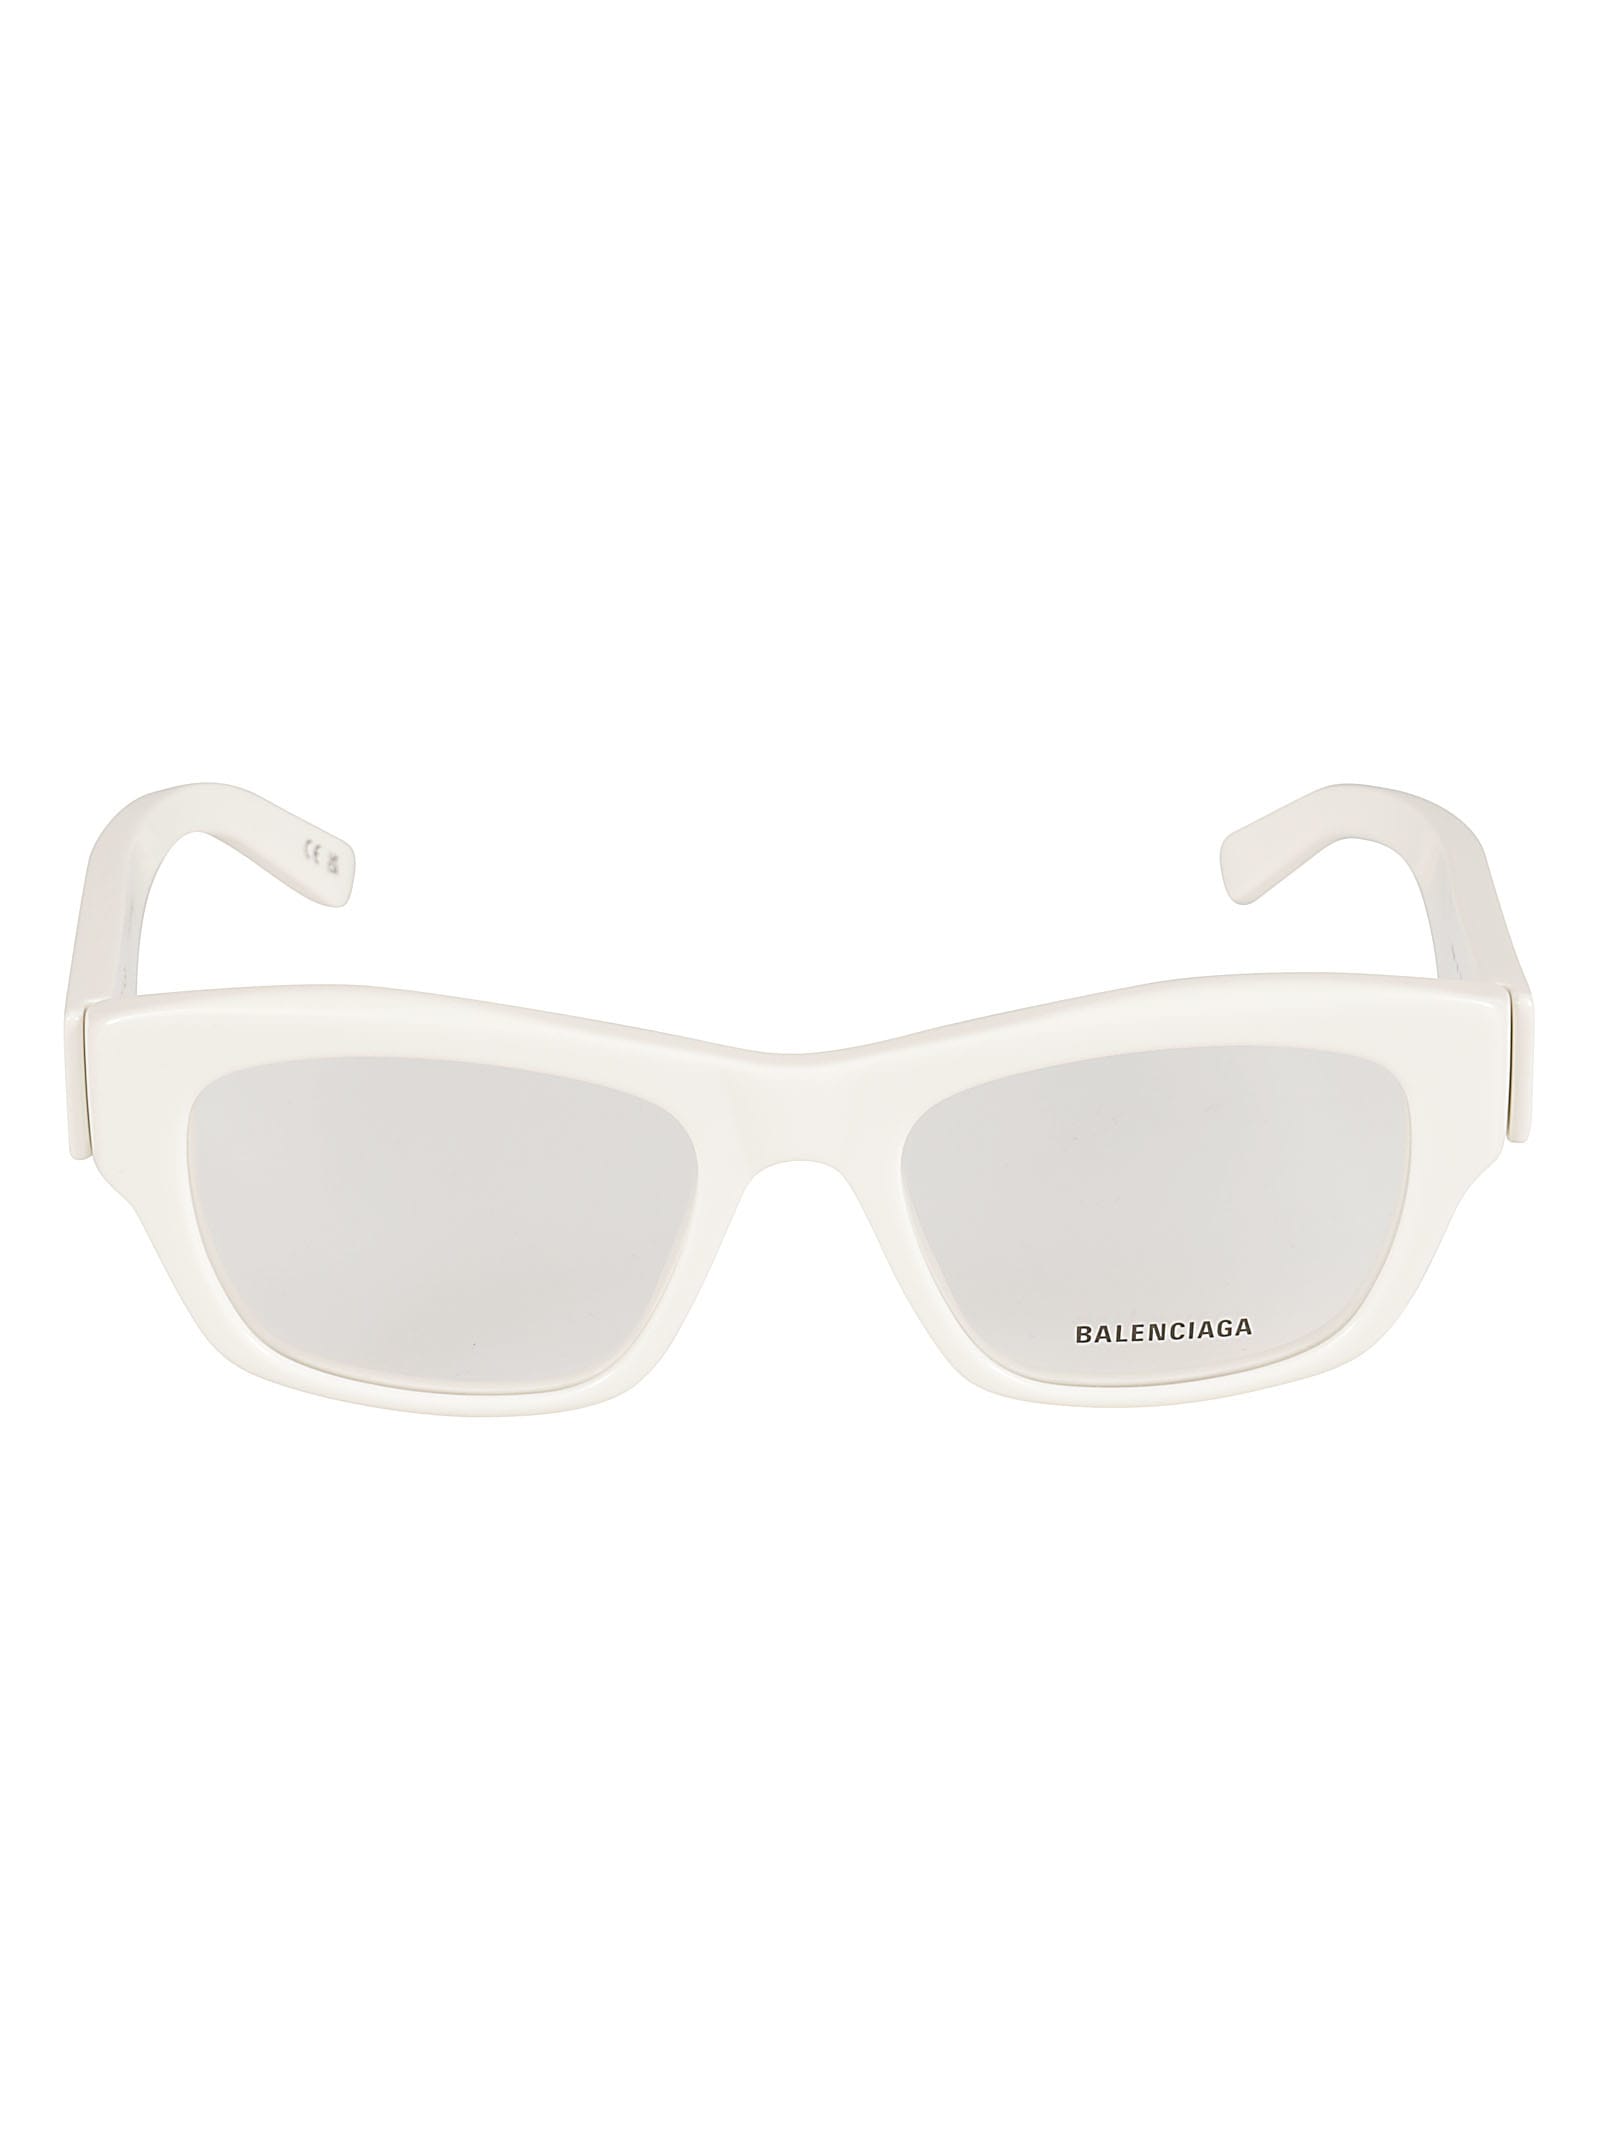 Balenciaga Square Frame Logo Sided Glasses In White/transparent